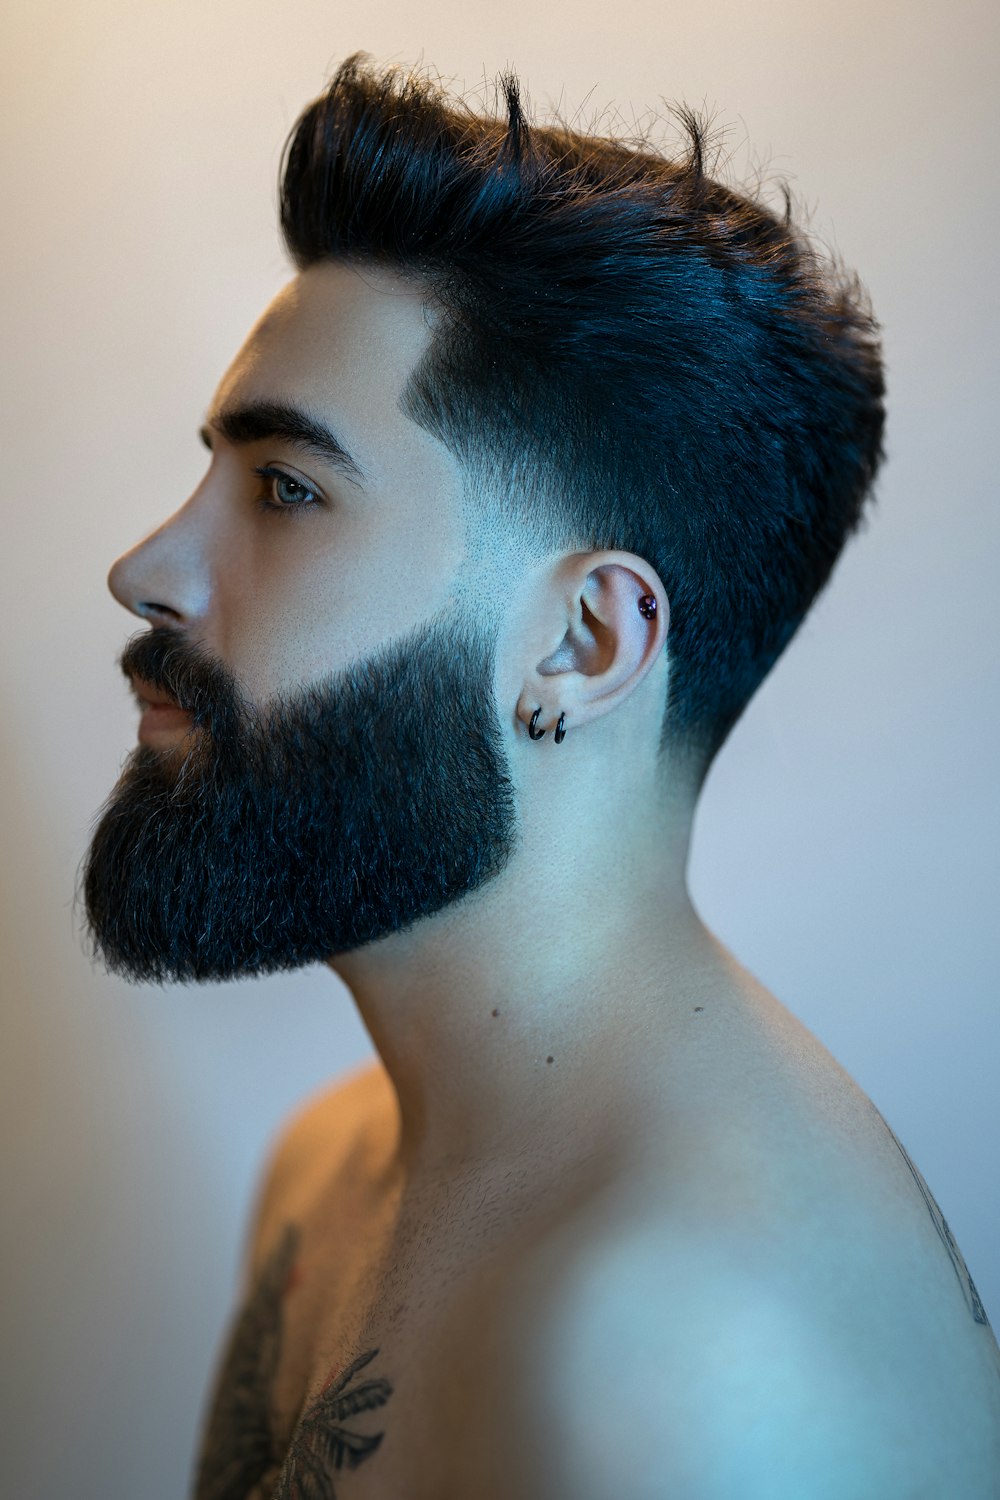 man with black and white beard photo – Free Male portrait Image on Unsplash